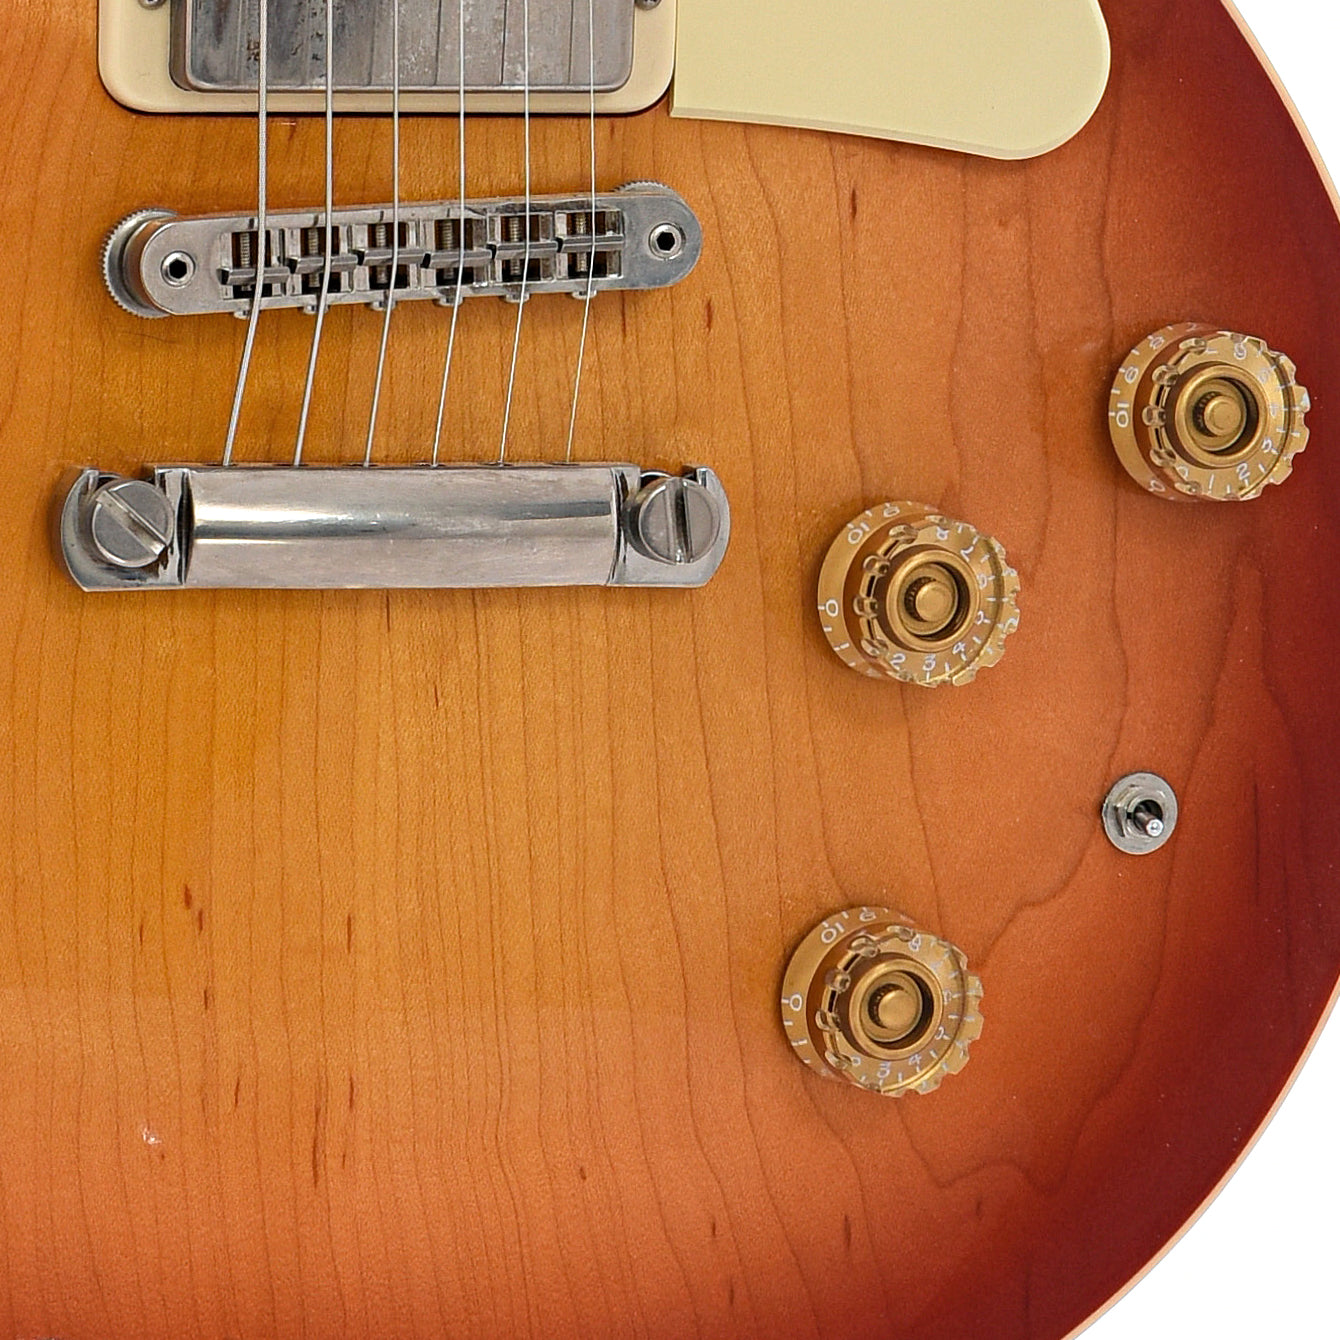 Bridge of Gibson Les Paul Deluxe 100th Anniversary